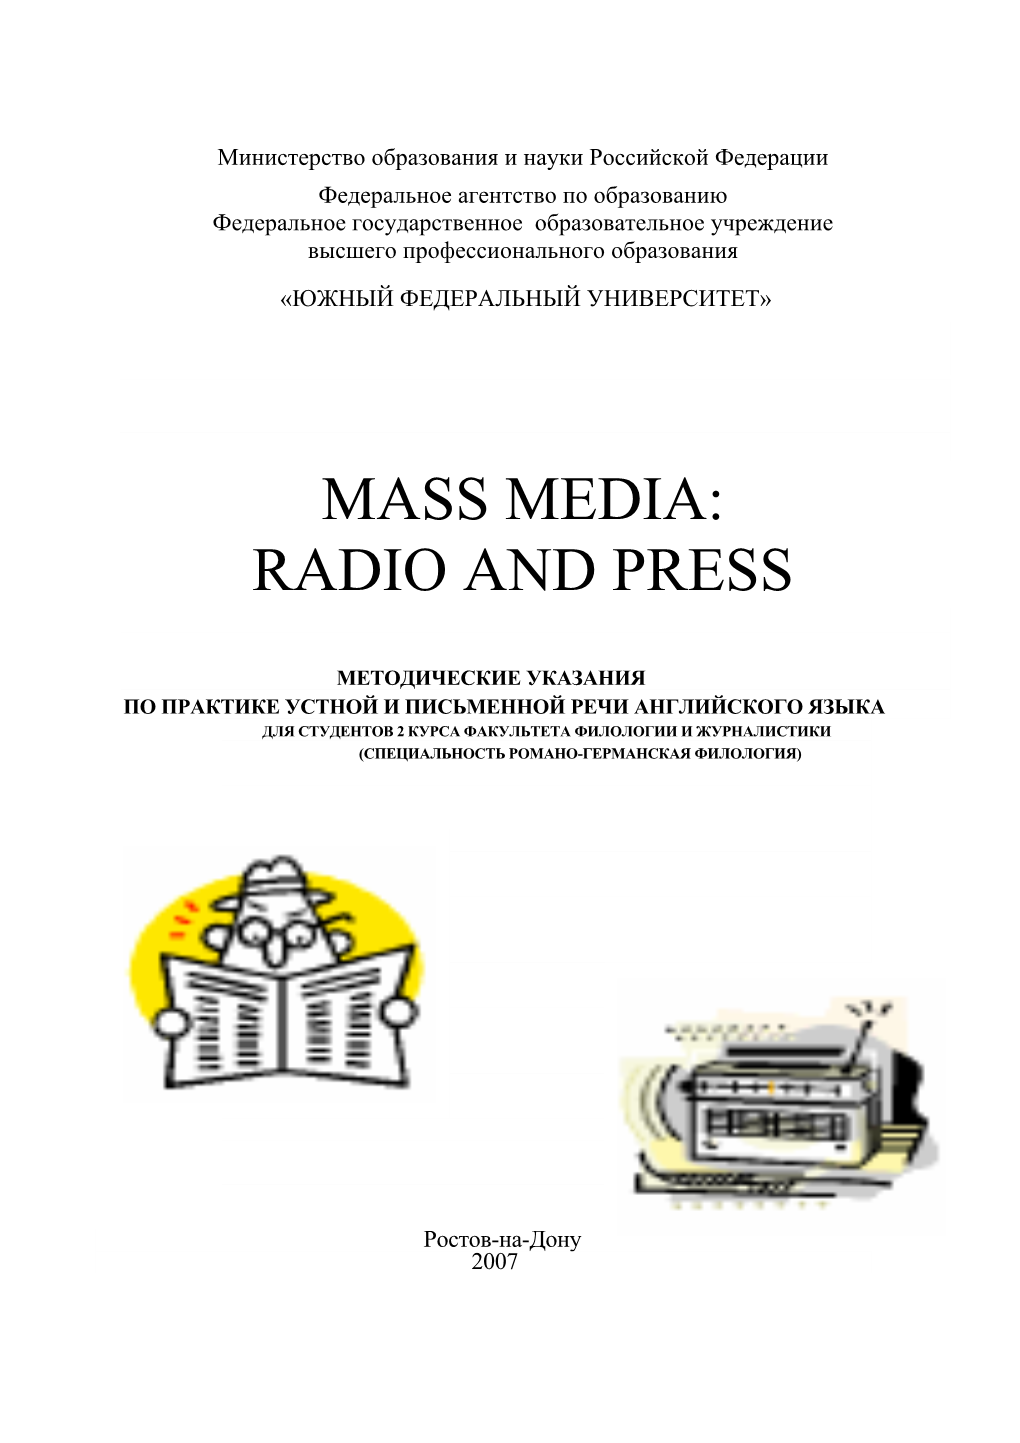 Mass Media: Radio and Press